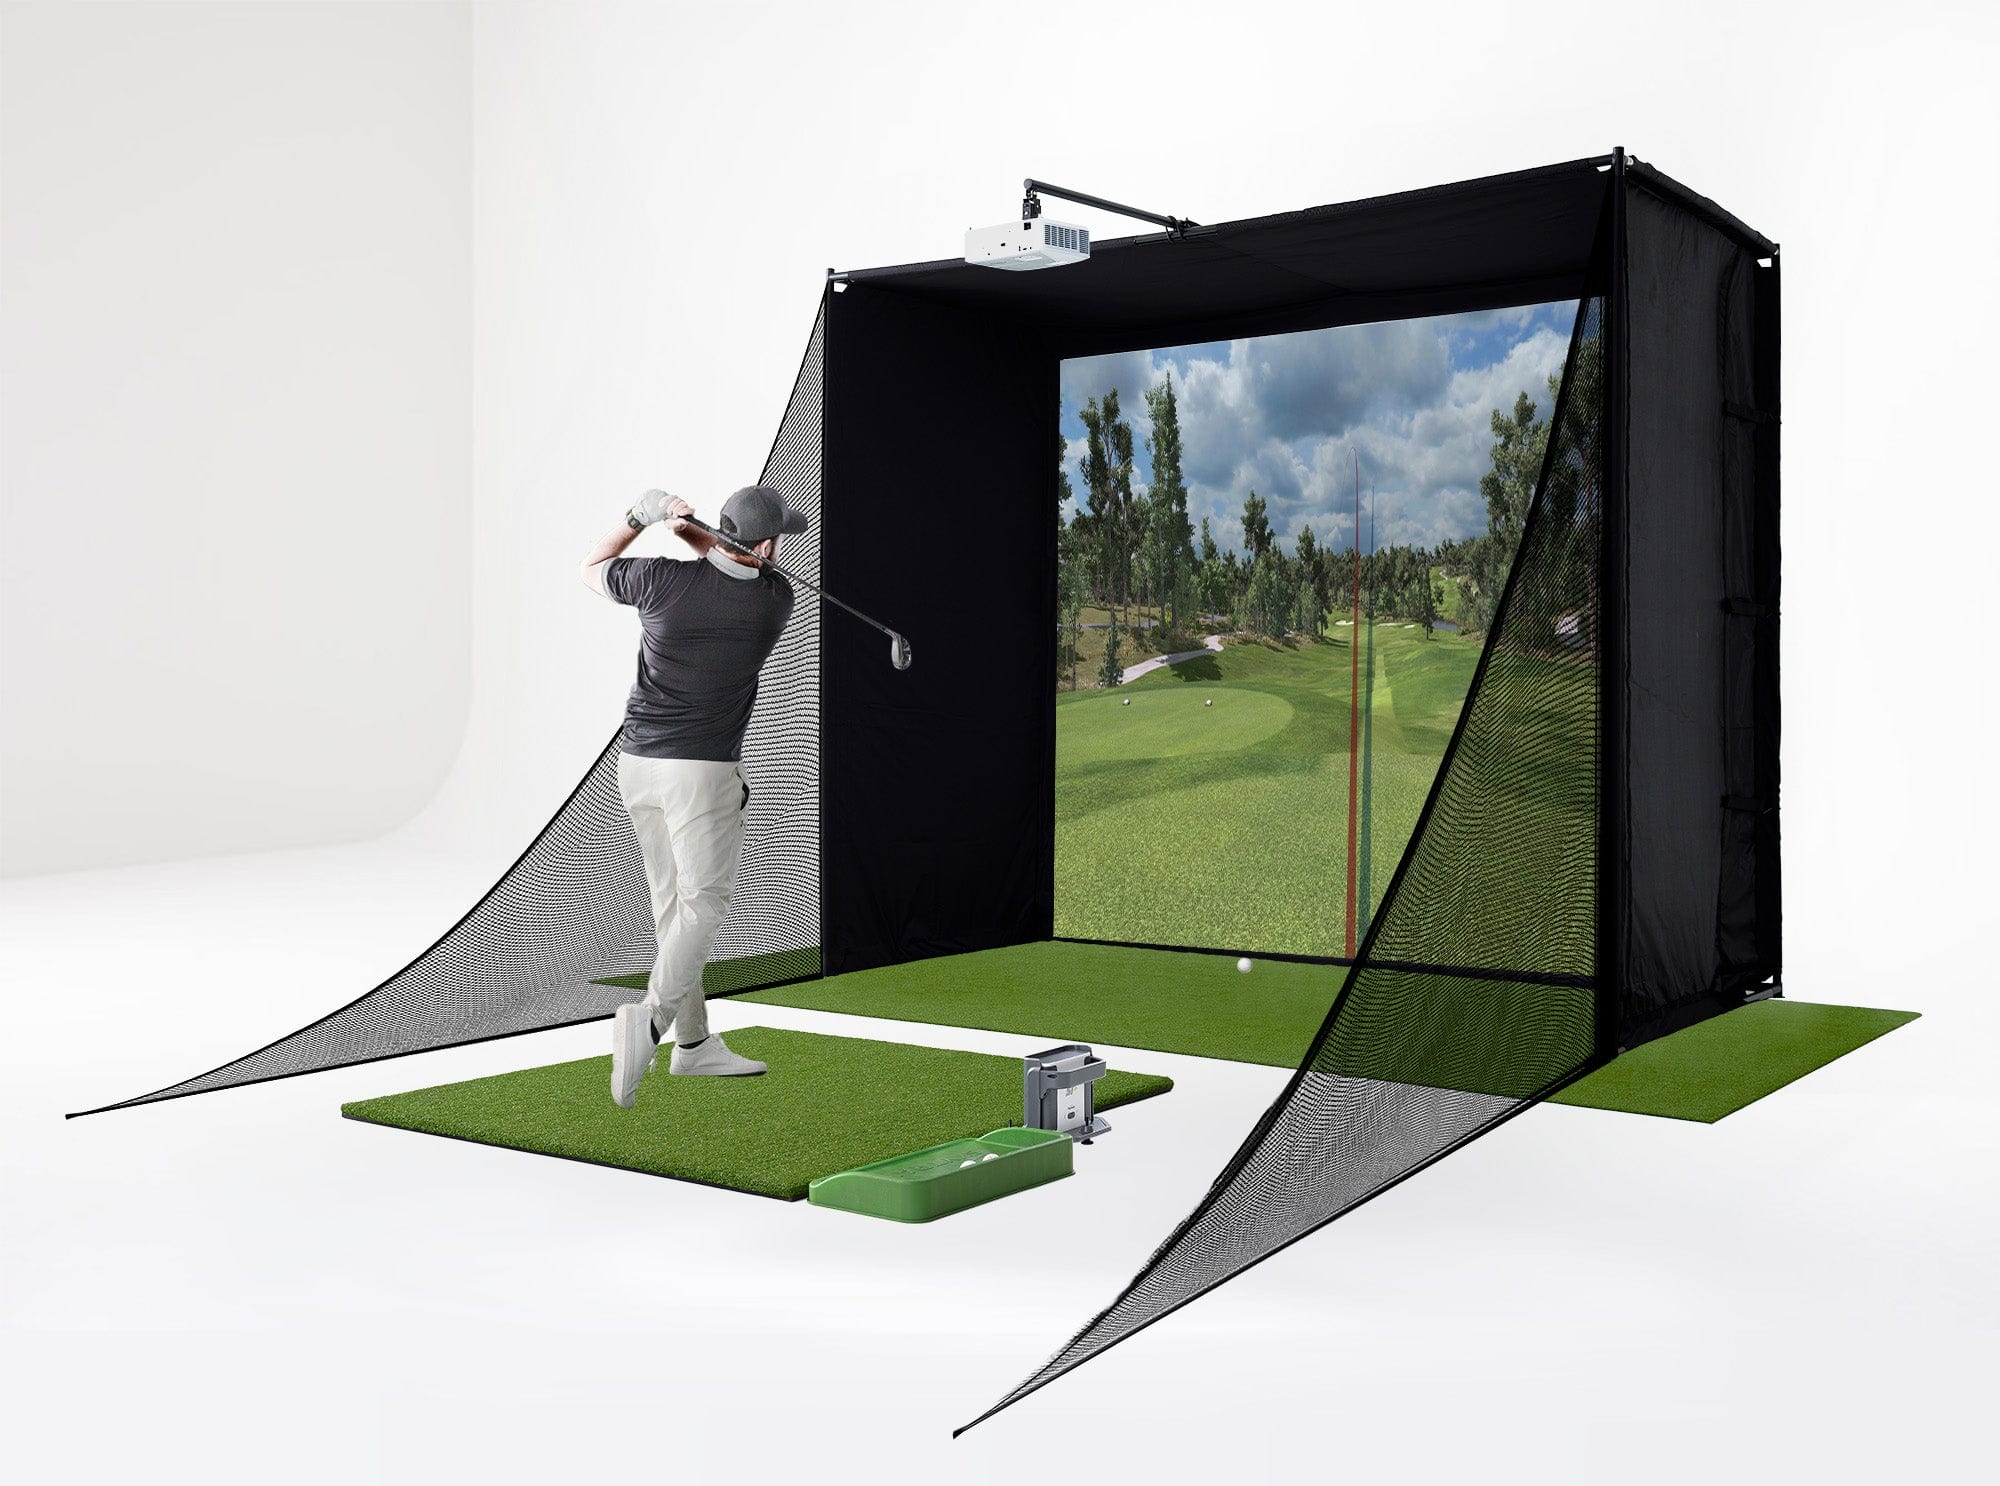 SKYTRAK golf simulator studio with gaming computer